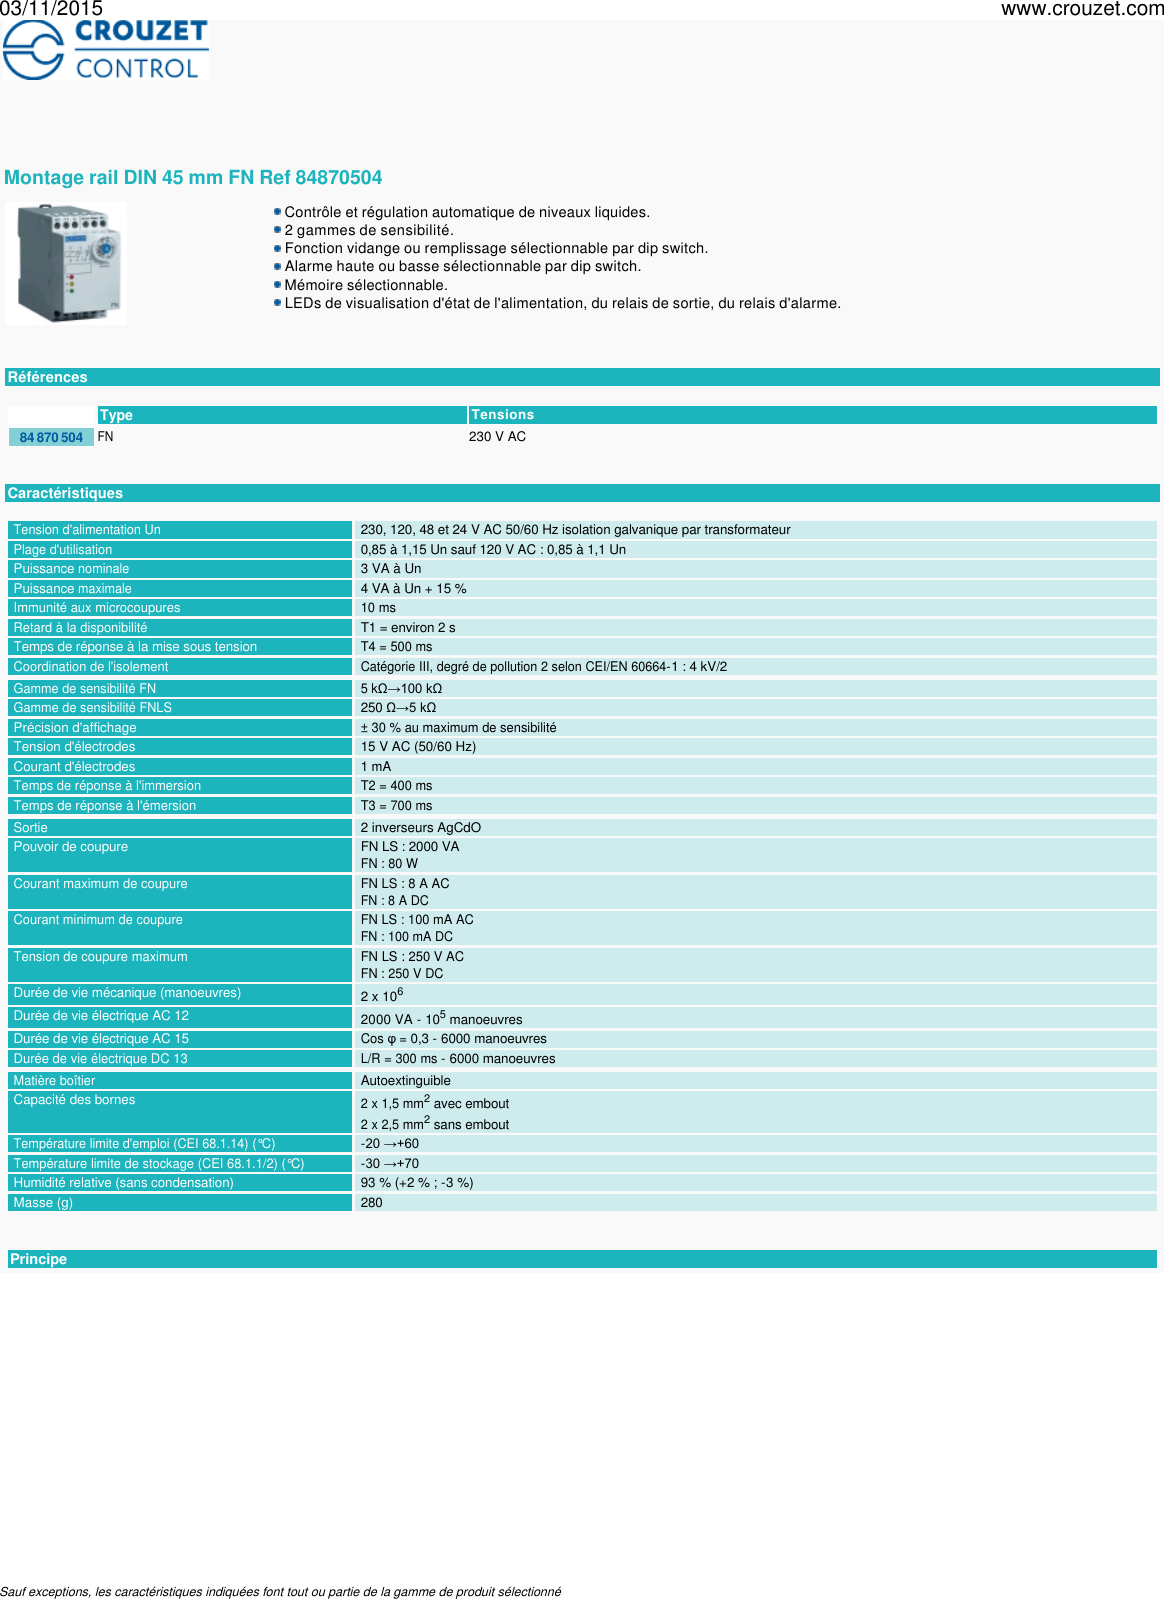 Page 1 of 6 - Relais-de-mesure-et-controle-relais-de-mesure-et-controle-de-niveau-montage-rail-din-45-mm-fn-Ref-84870504